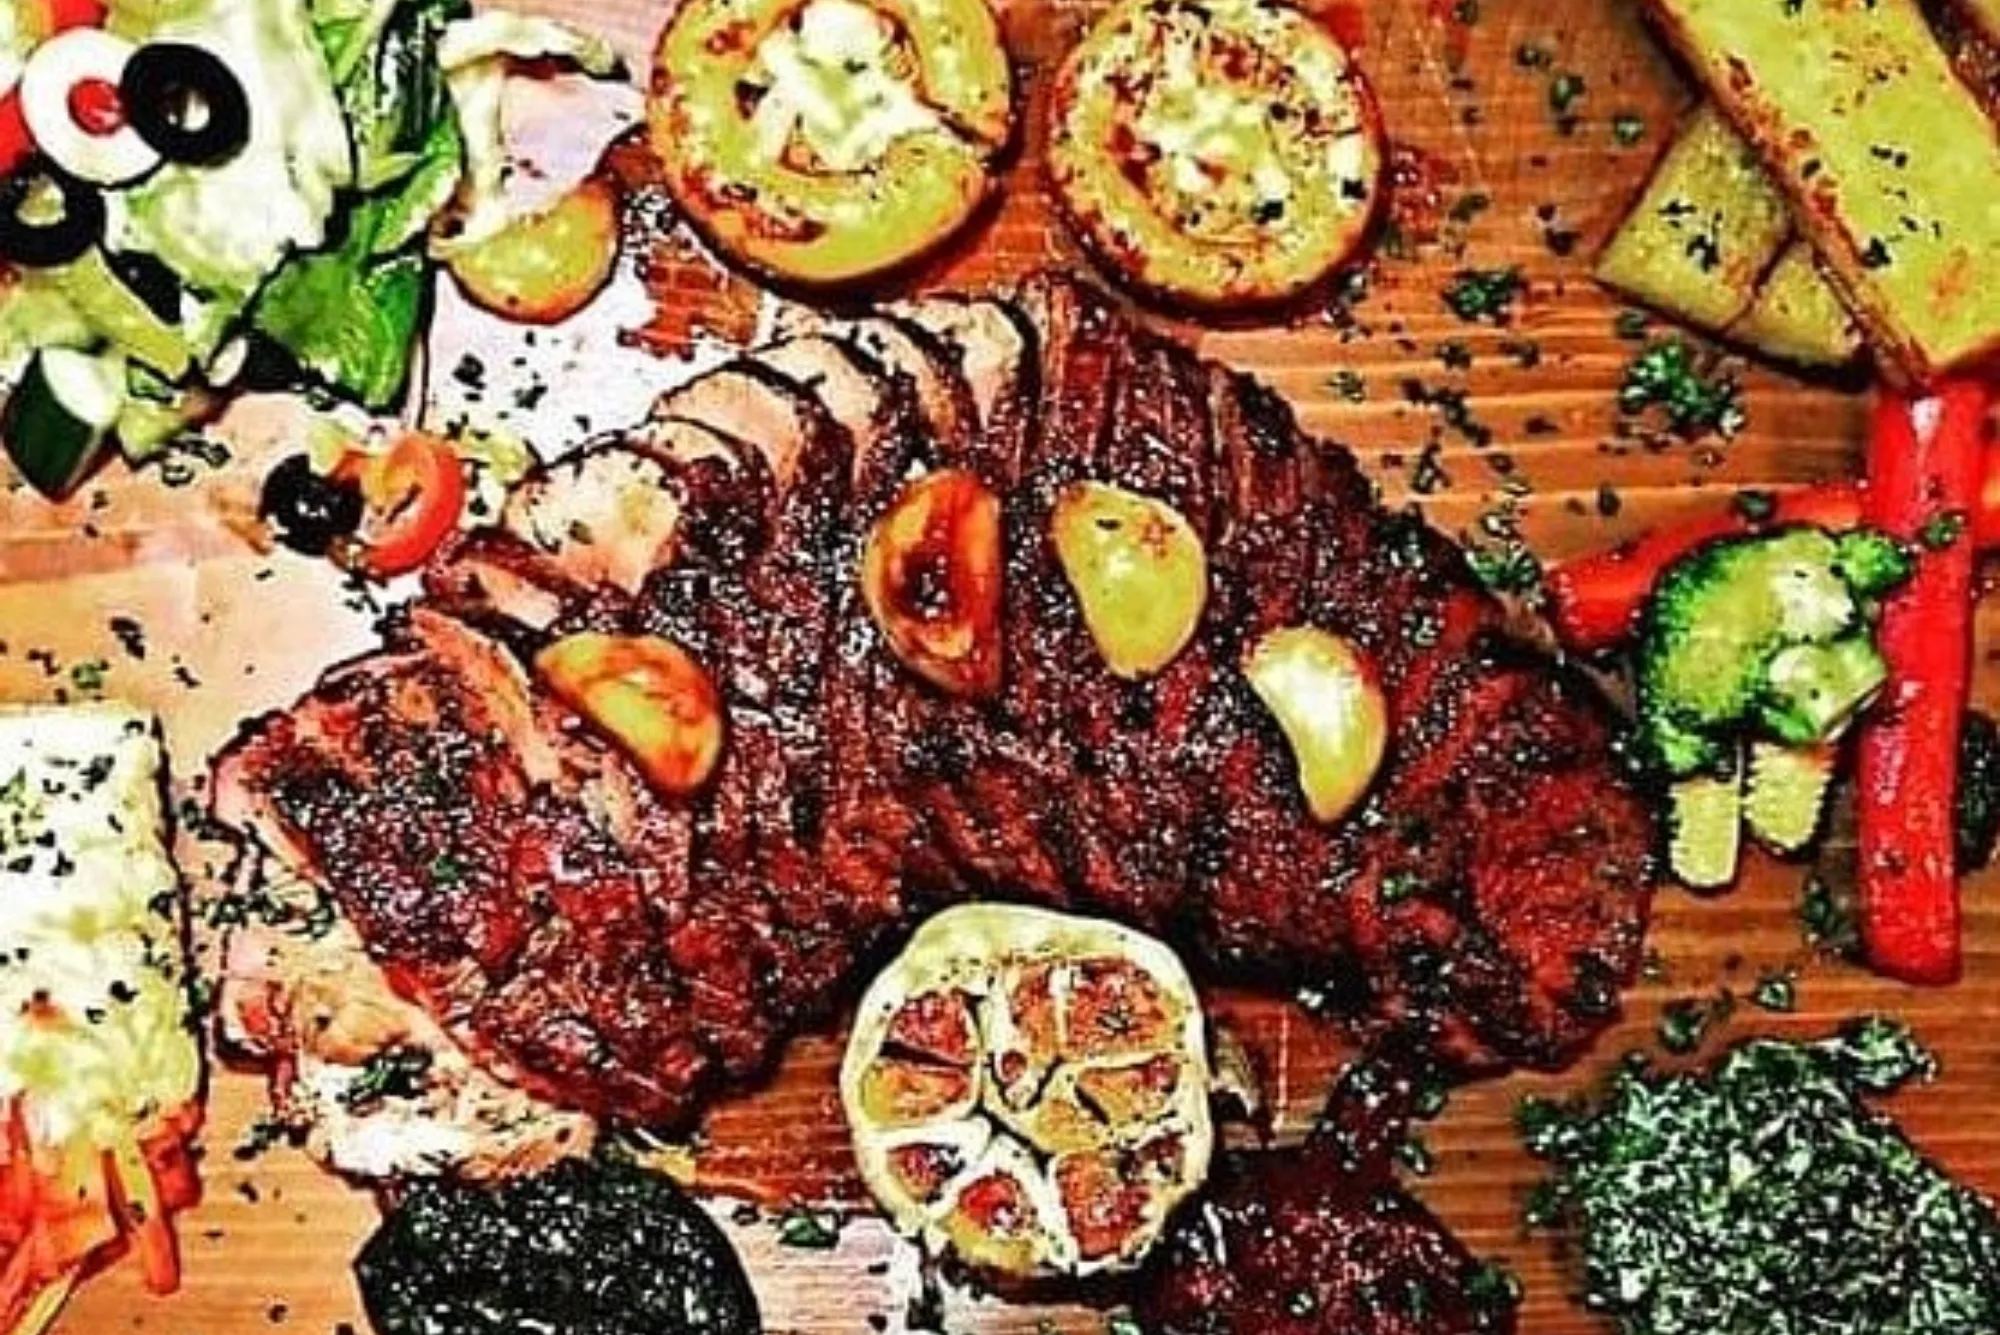 Top 10 Steak Restaurants Near Me: Sizzling Options for Meat Lovers